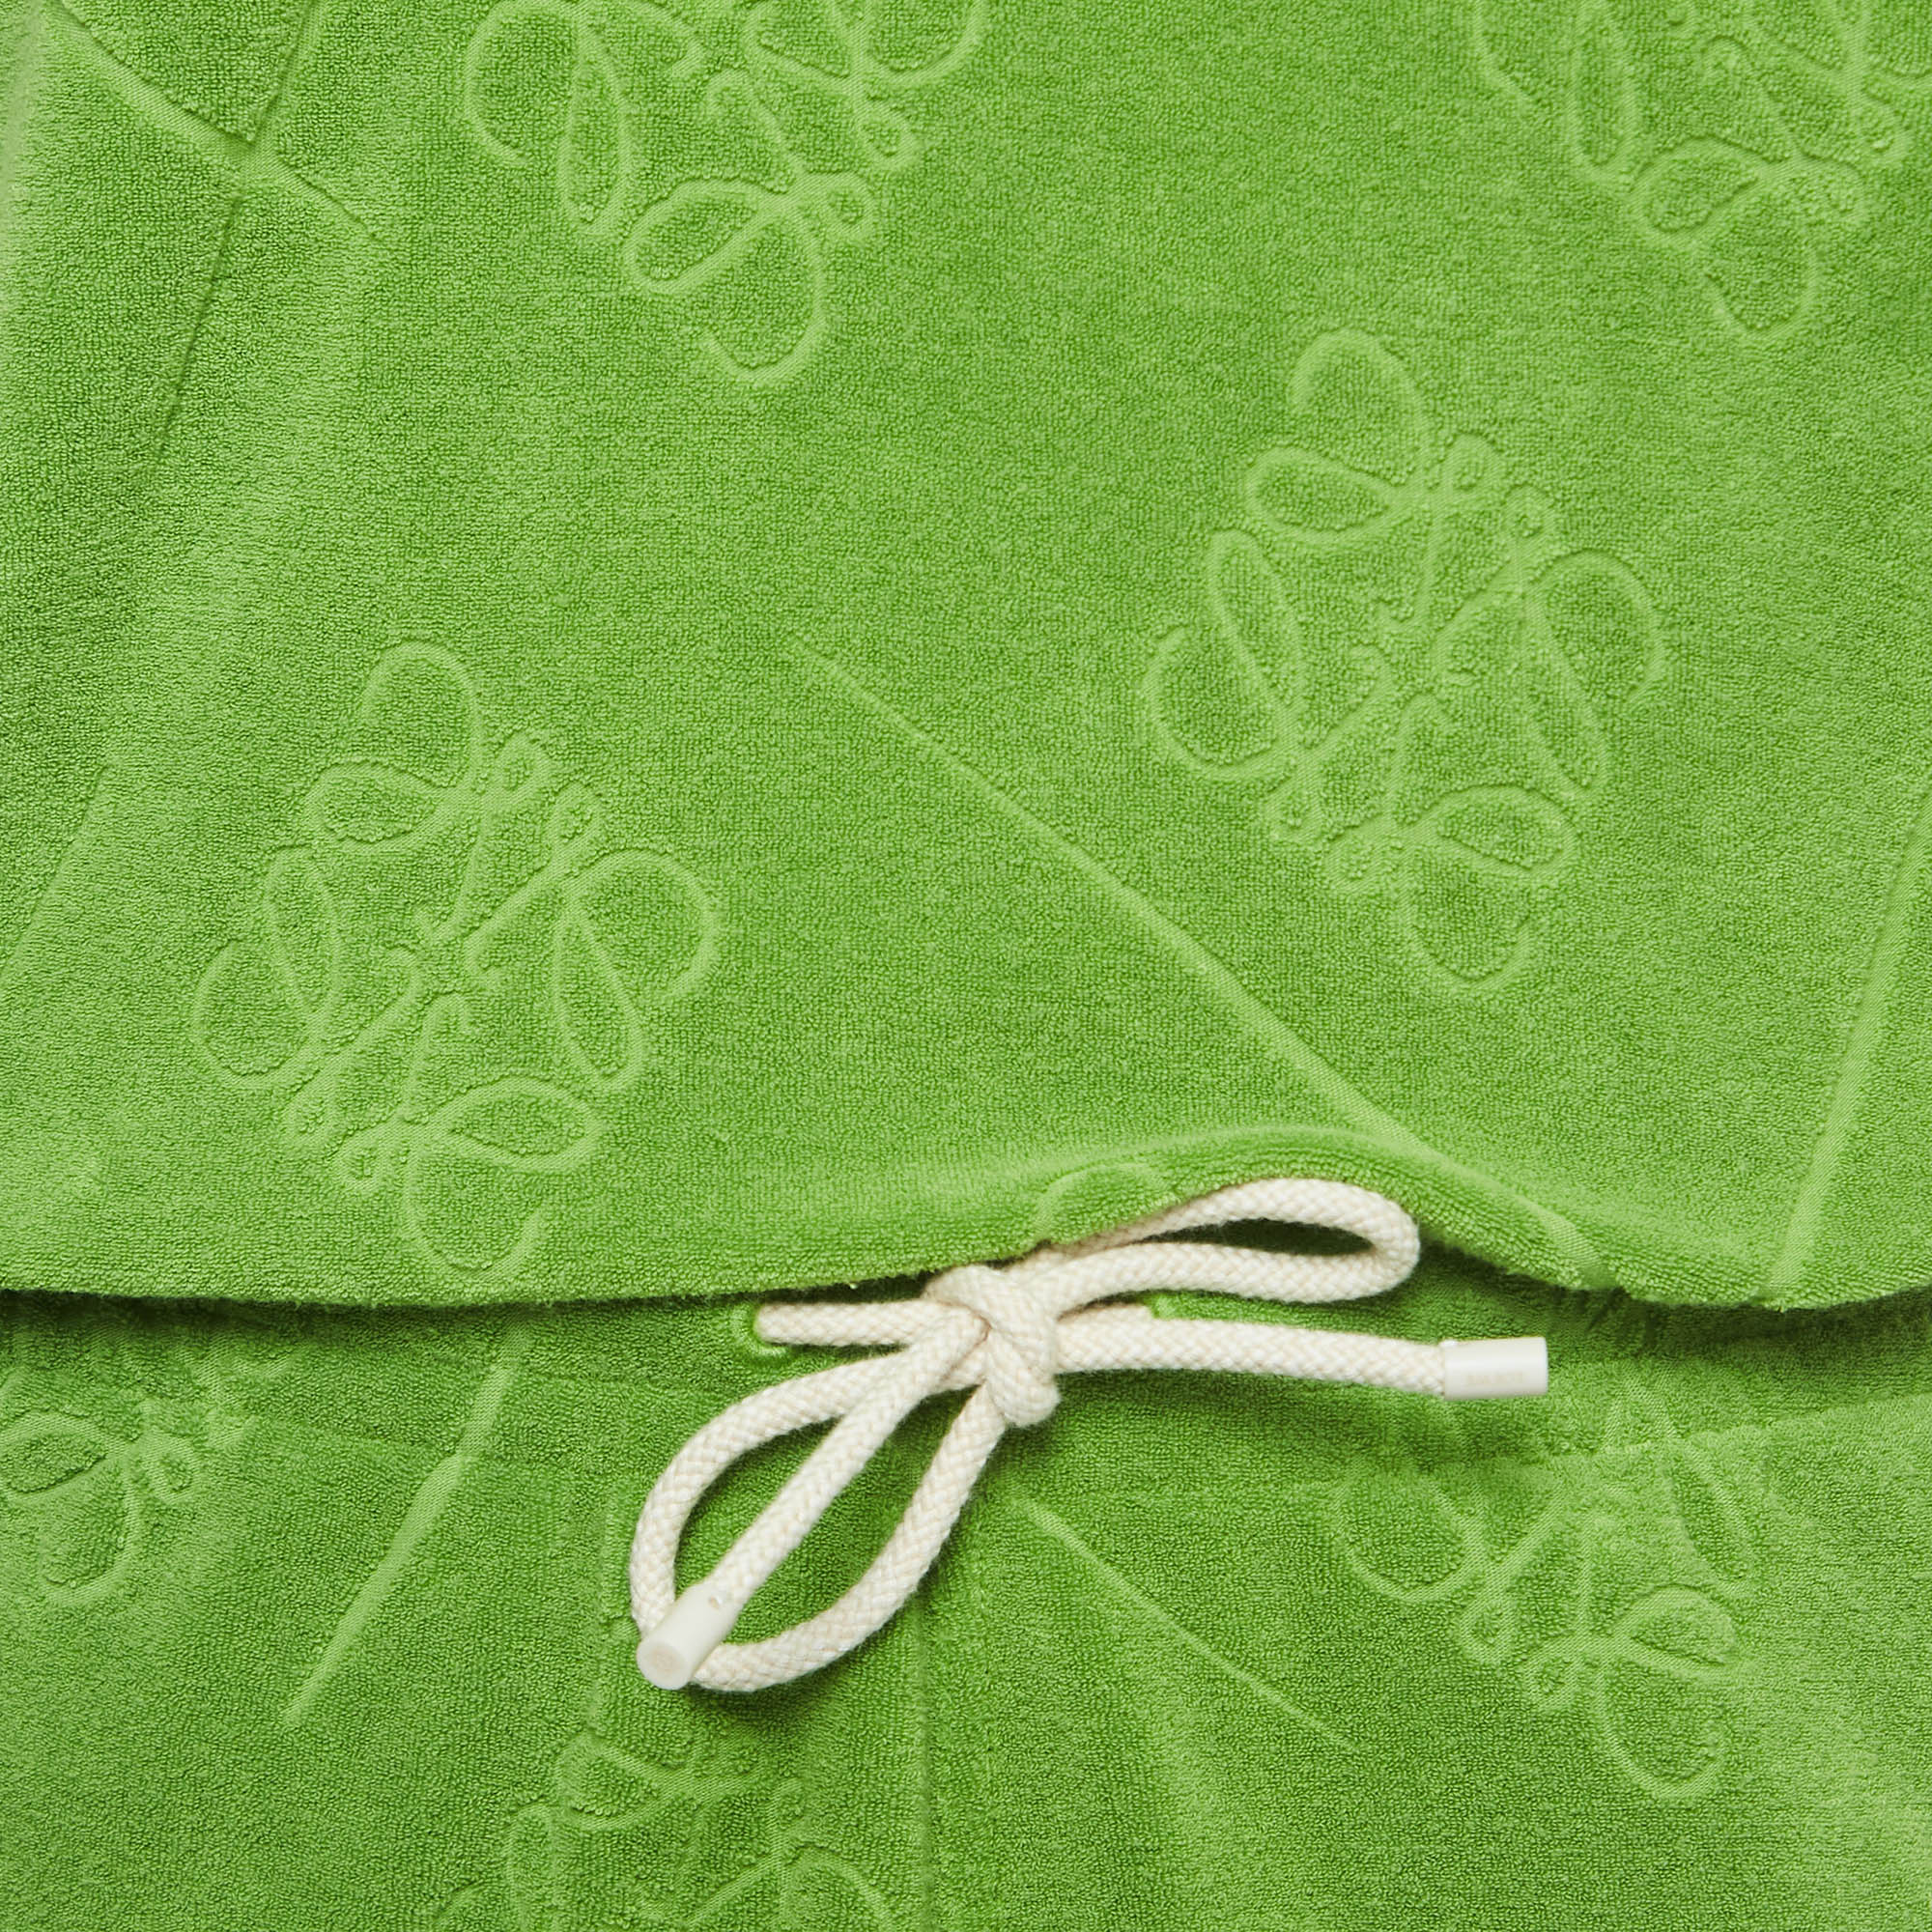 Loewe X Paula Ibiza Green Anagram Terry Cotton Shirt & Shorts Set M